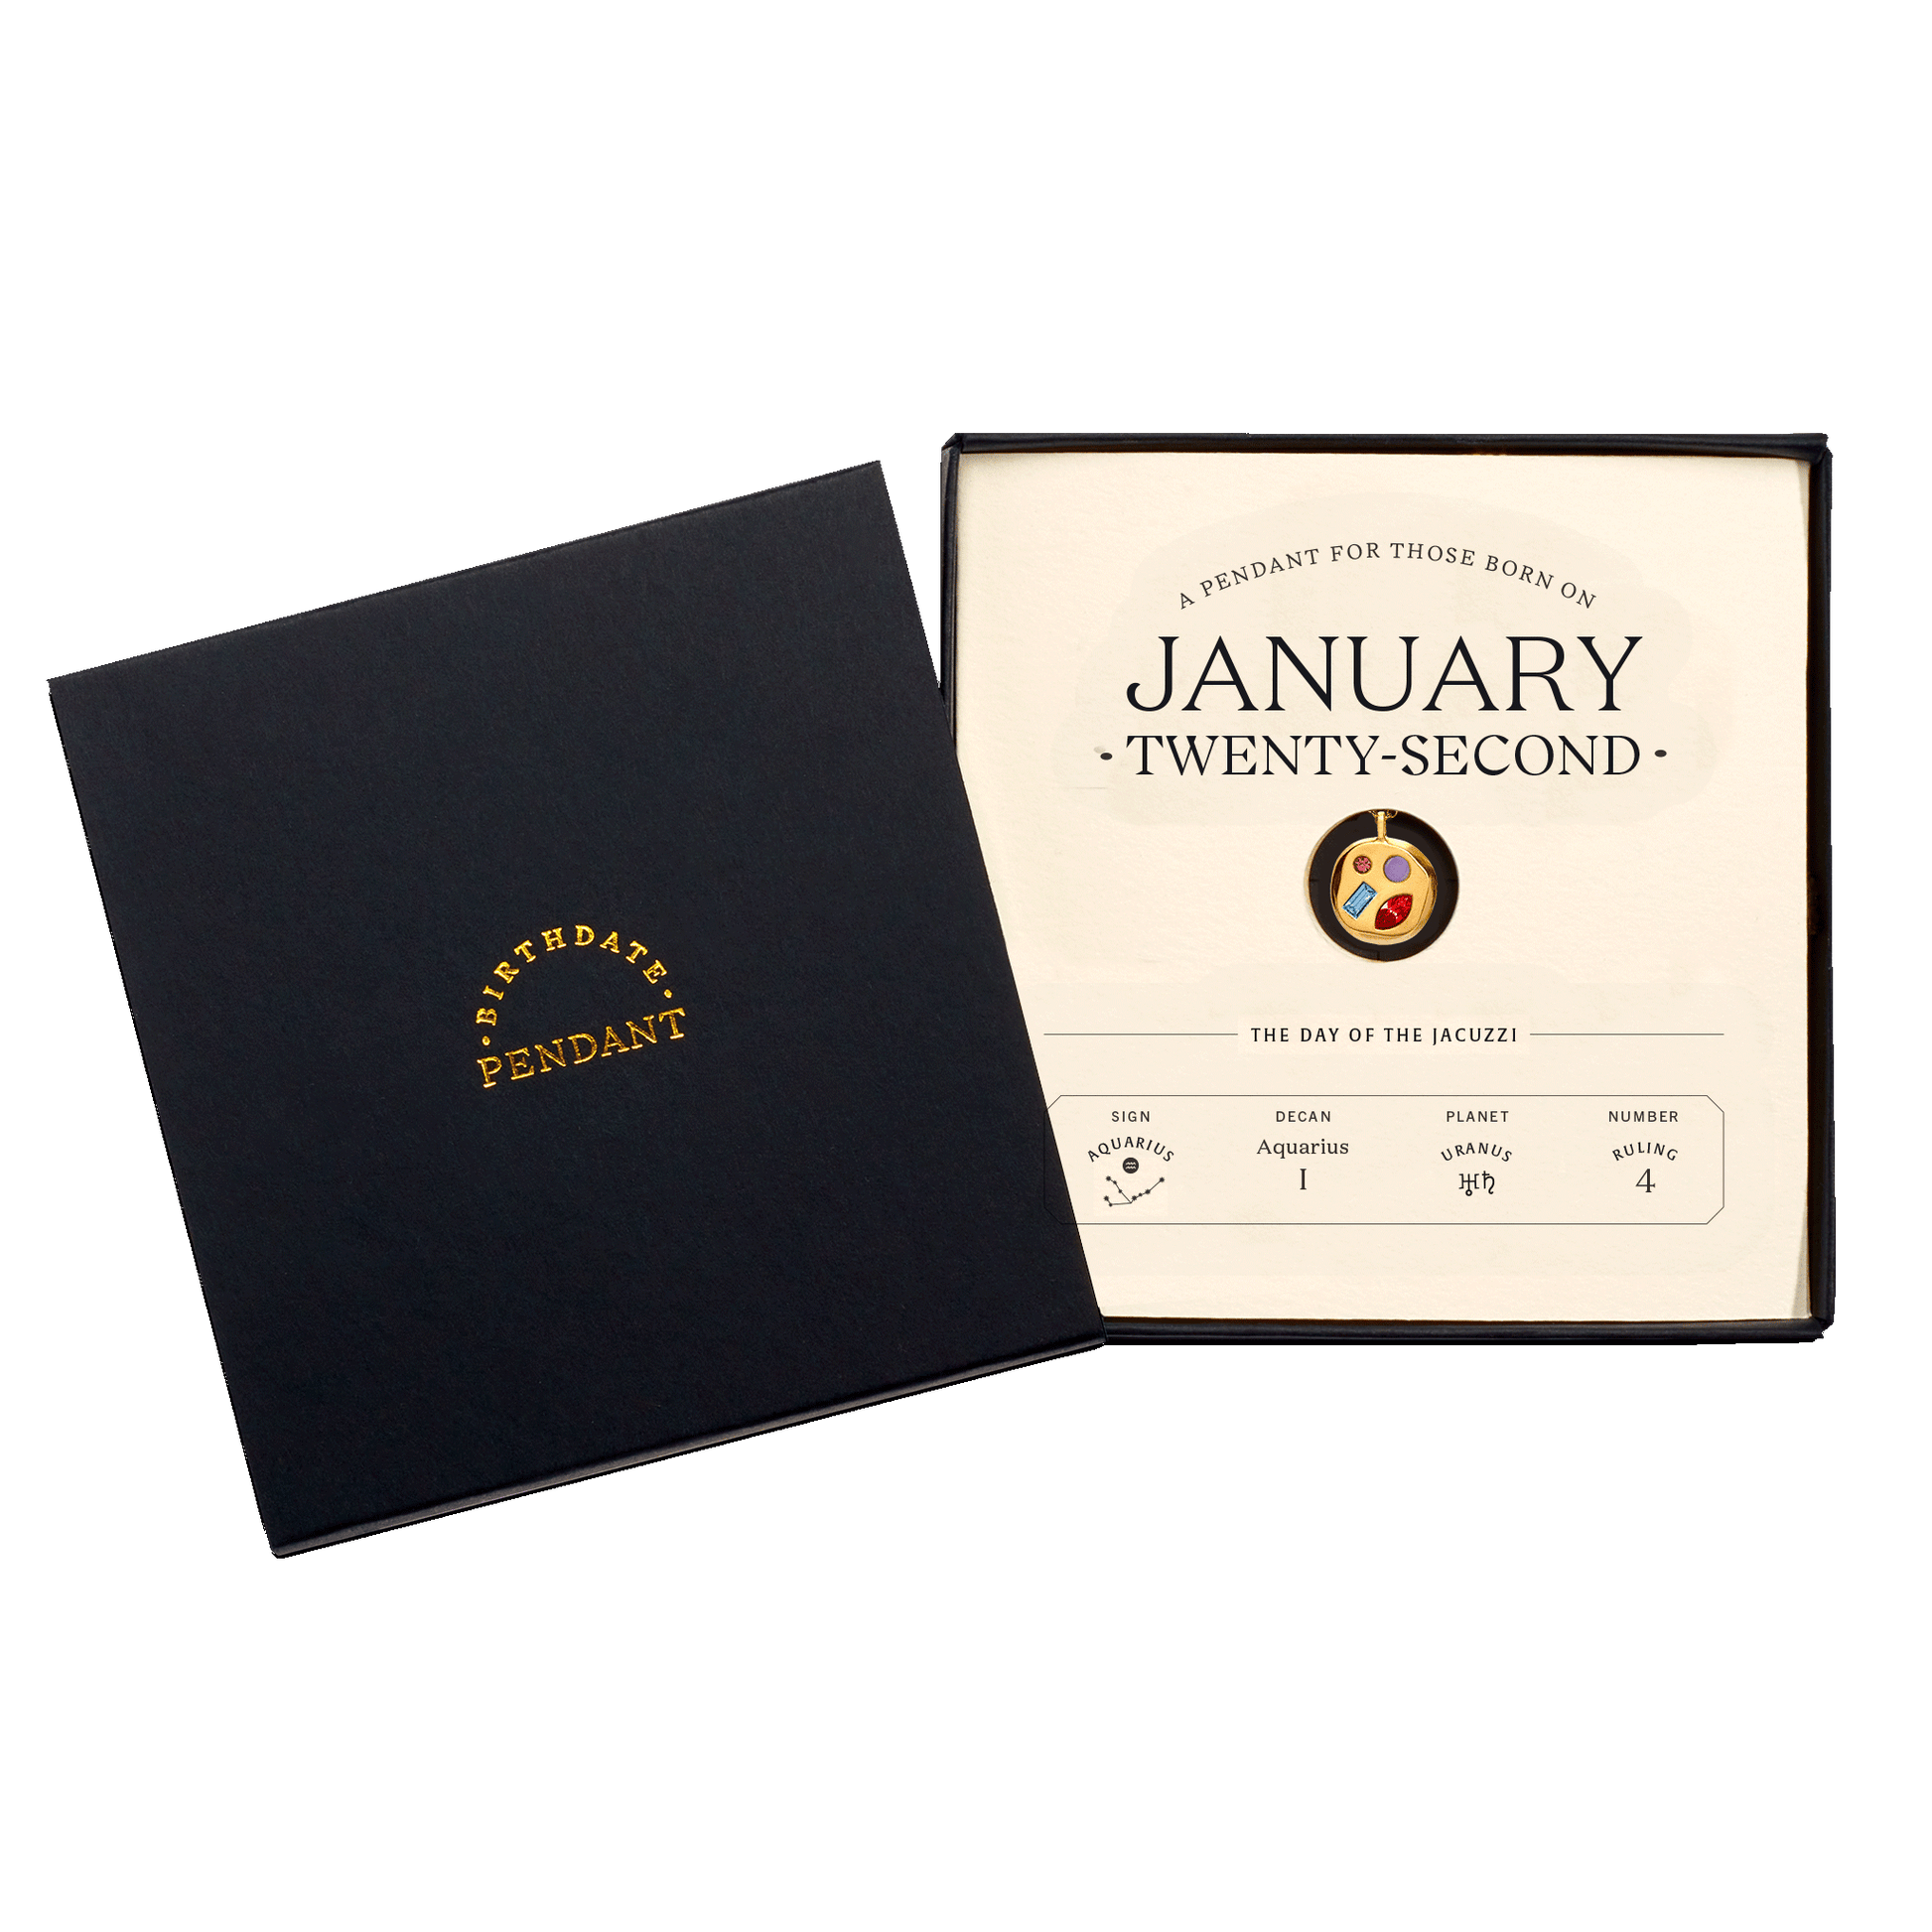 The January Twenty-Second Pendant inside its box